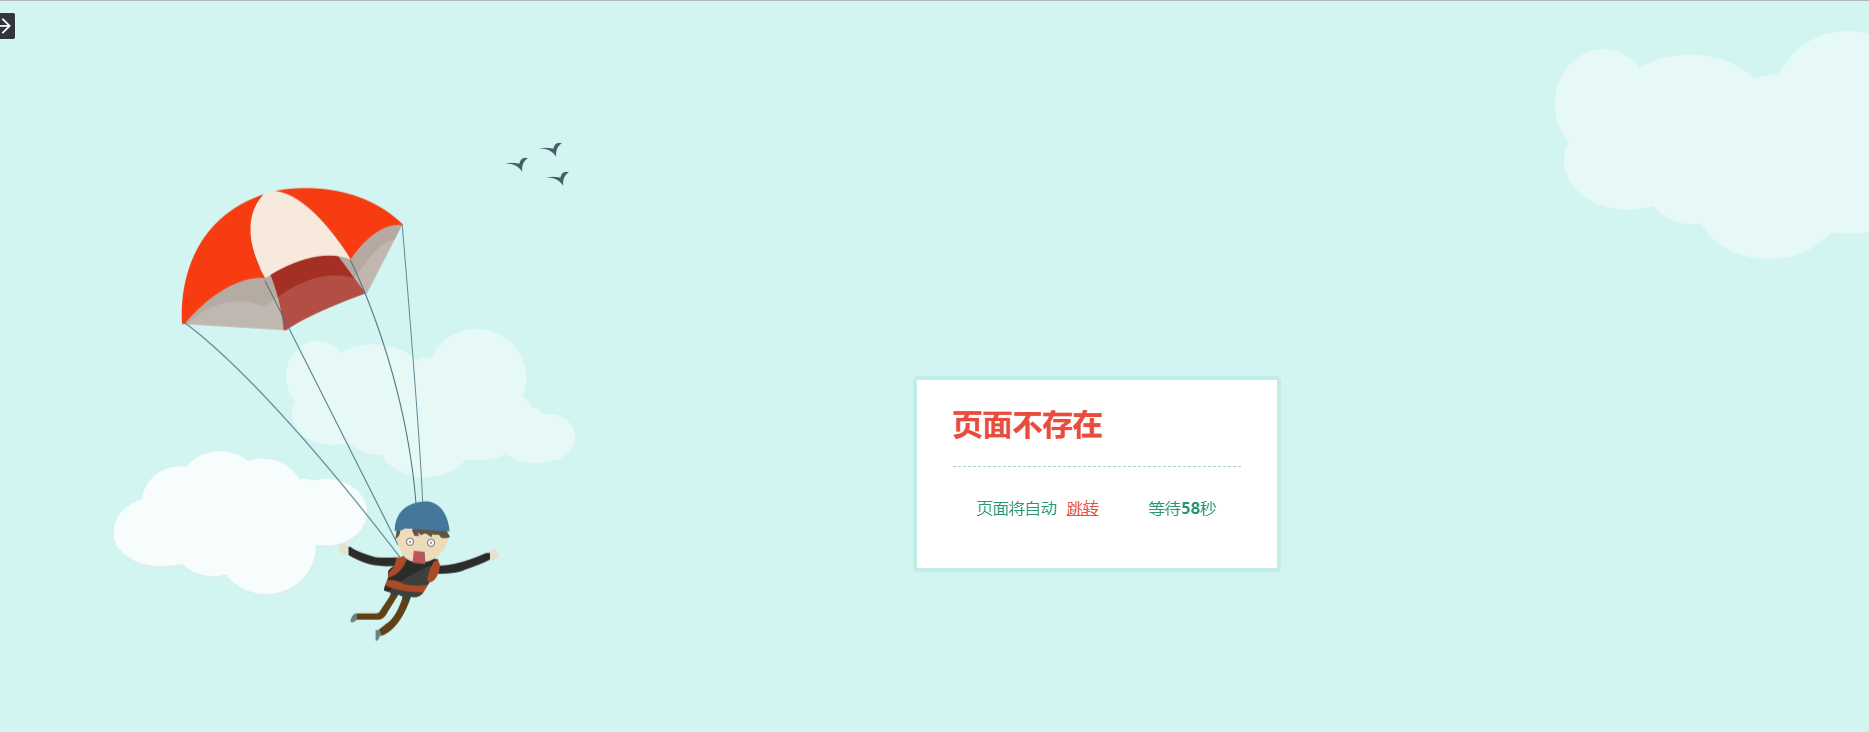 jQuery+CSS3实现404背景动画特效【转】